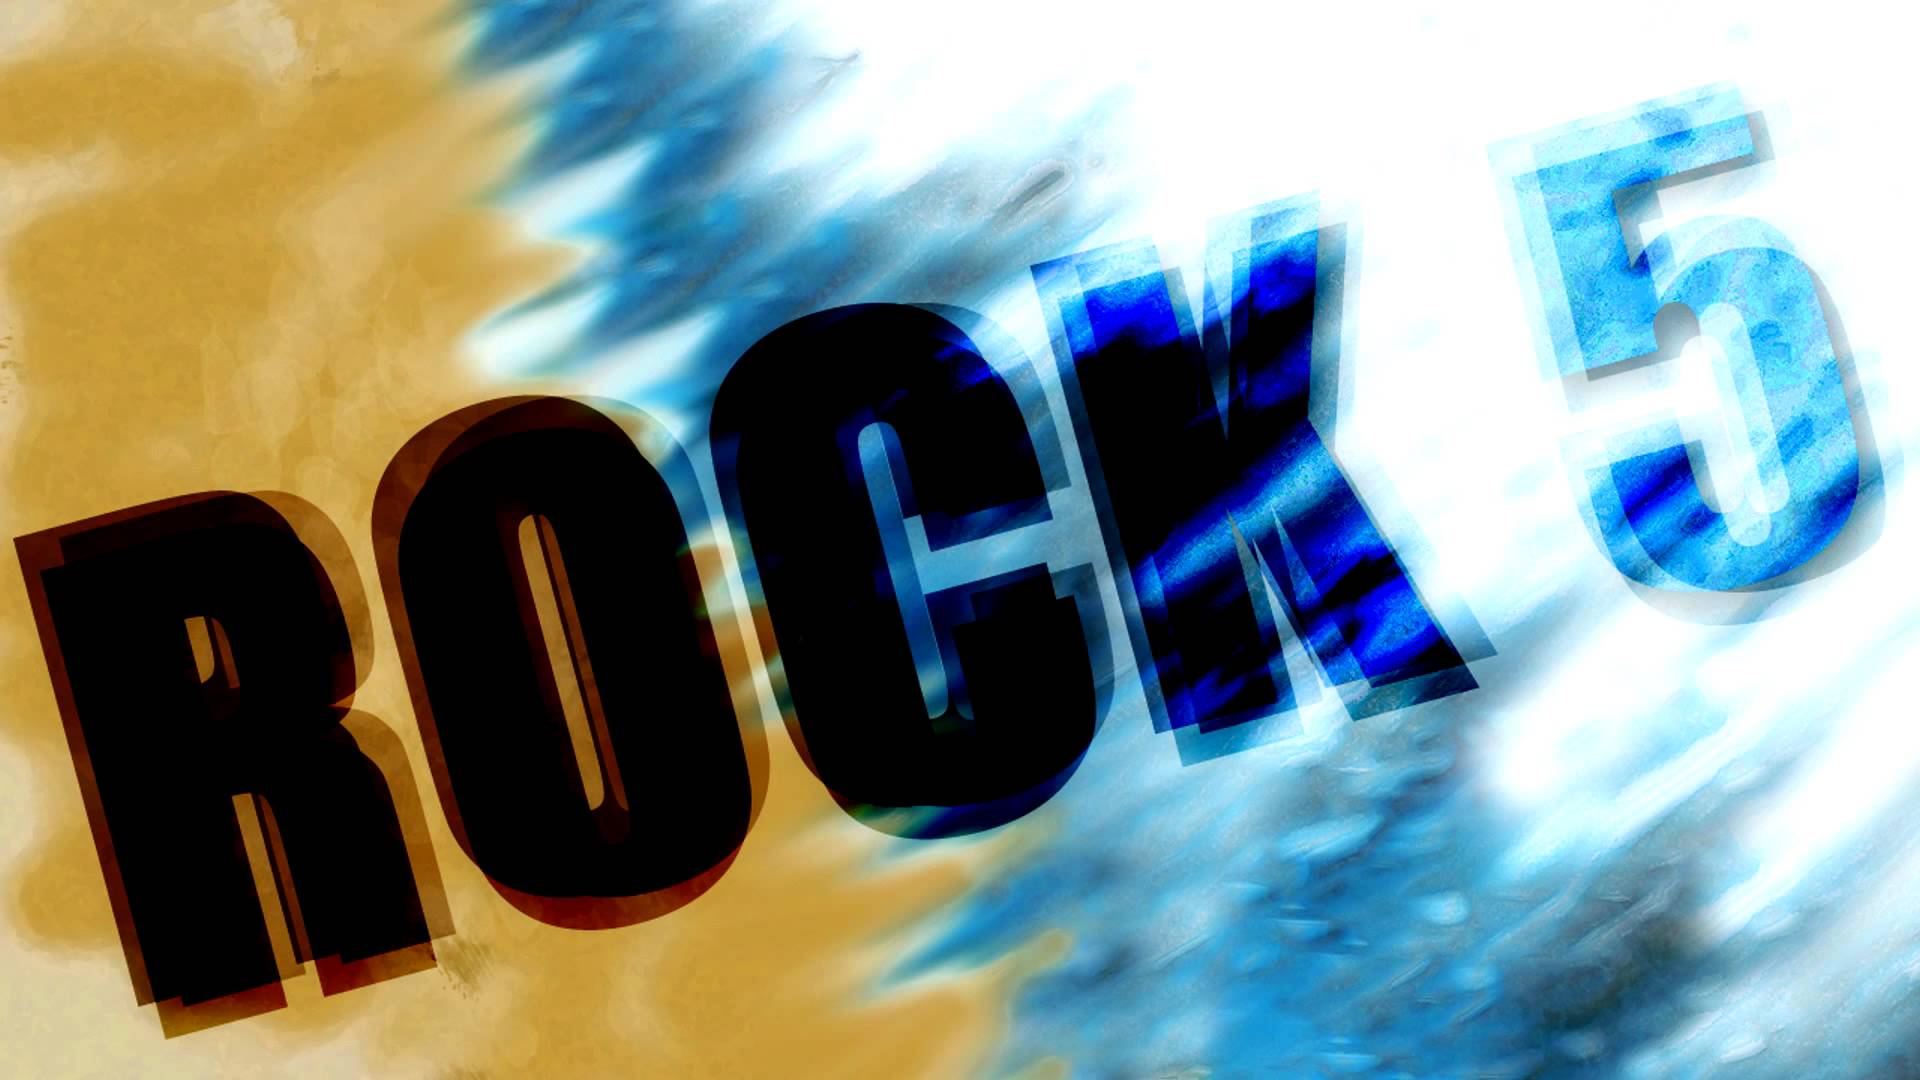 Song - Rock 5 (Space Face Ending Theme) - YouTube